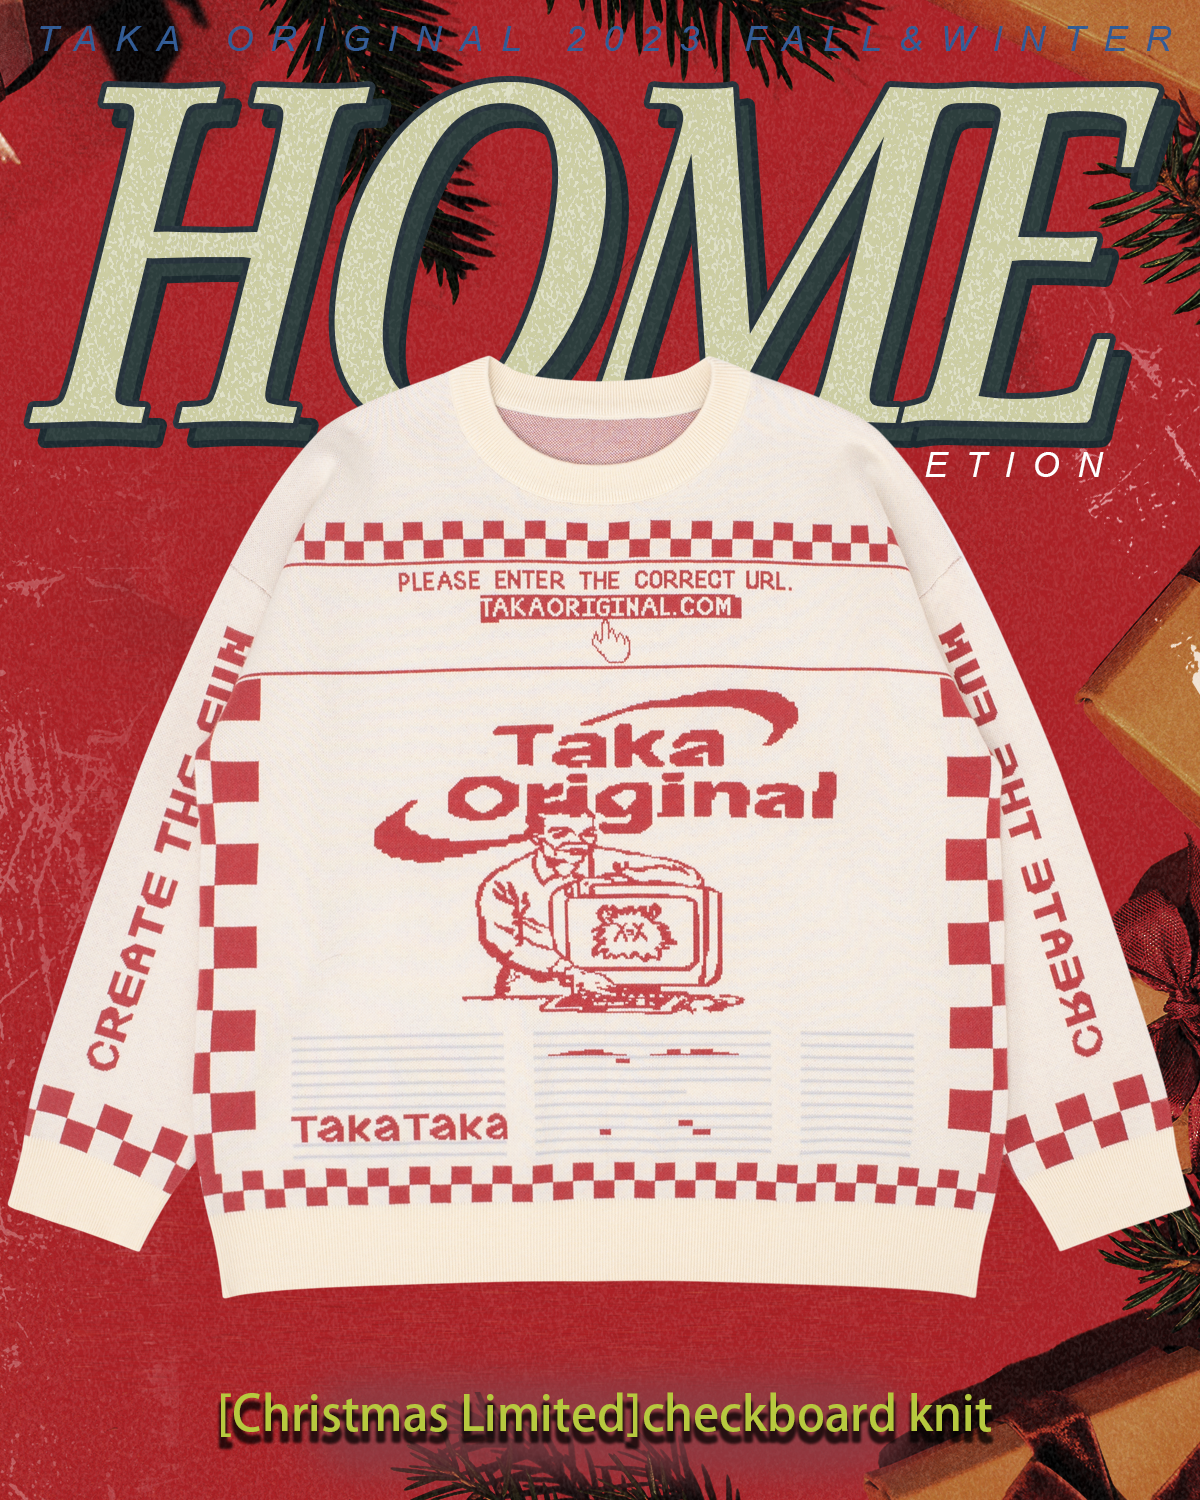 [Christmas Limited] TAKA Original Moody Bob mosaic checkboard knit jumper red